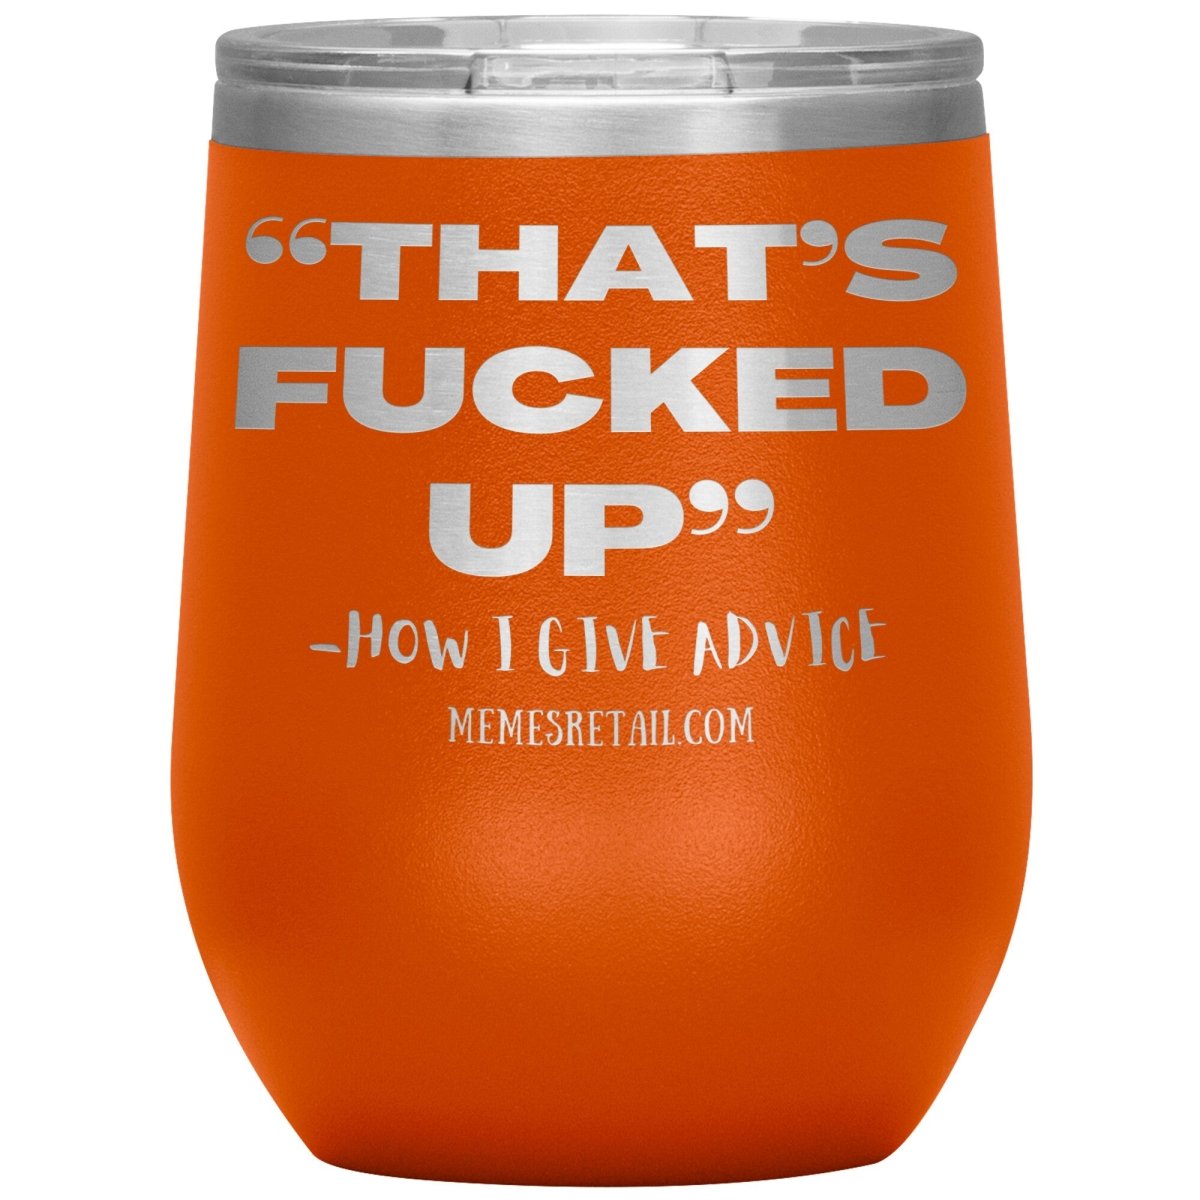 “That’s Fucked Up” -how I give advice Tumblers, 12oz Wine Insulated Tumbler / Orange - MemesRetail.com